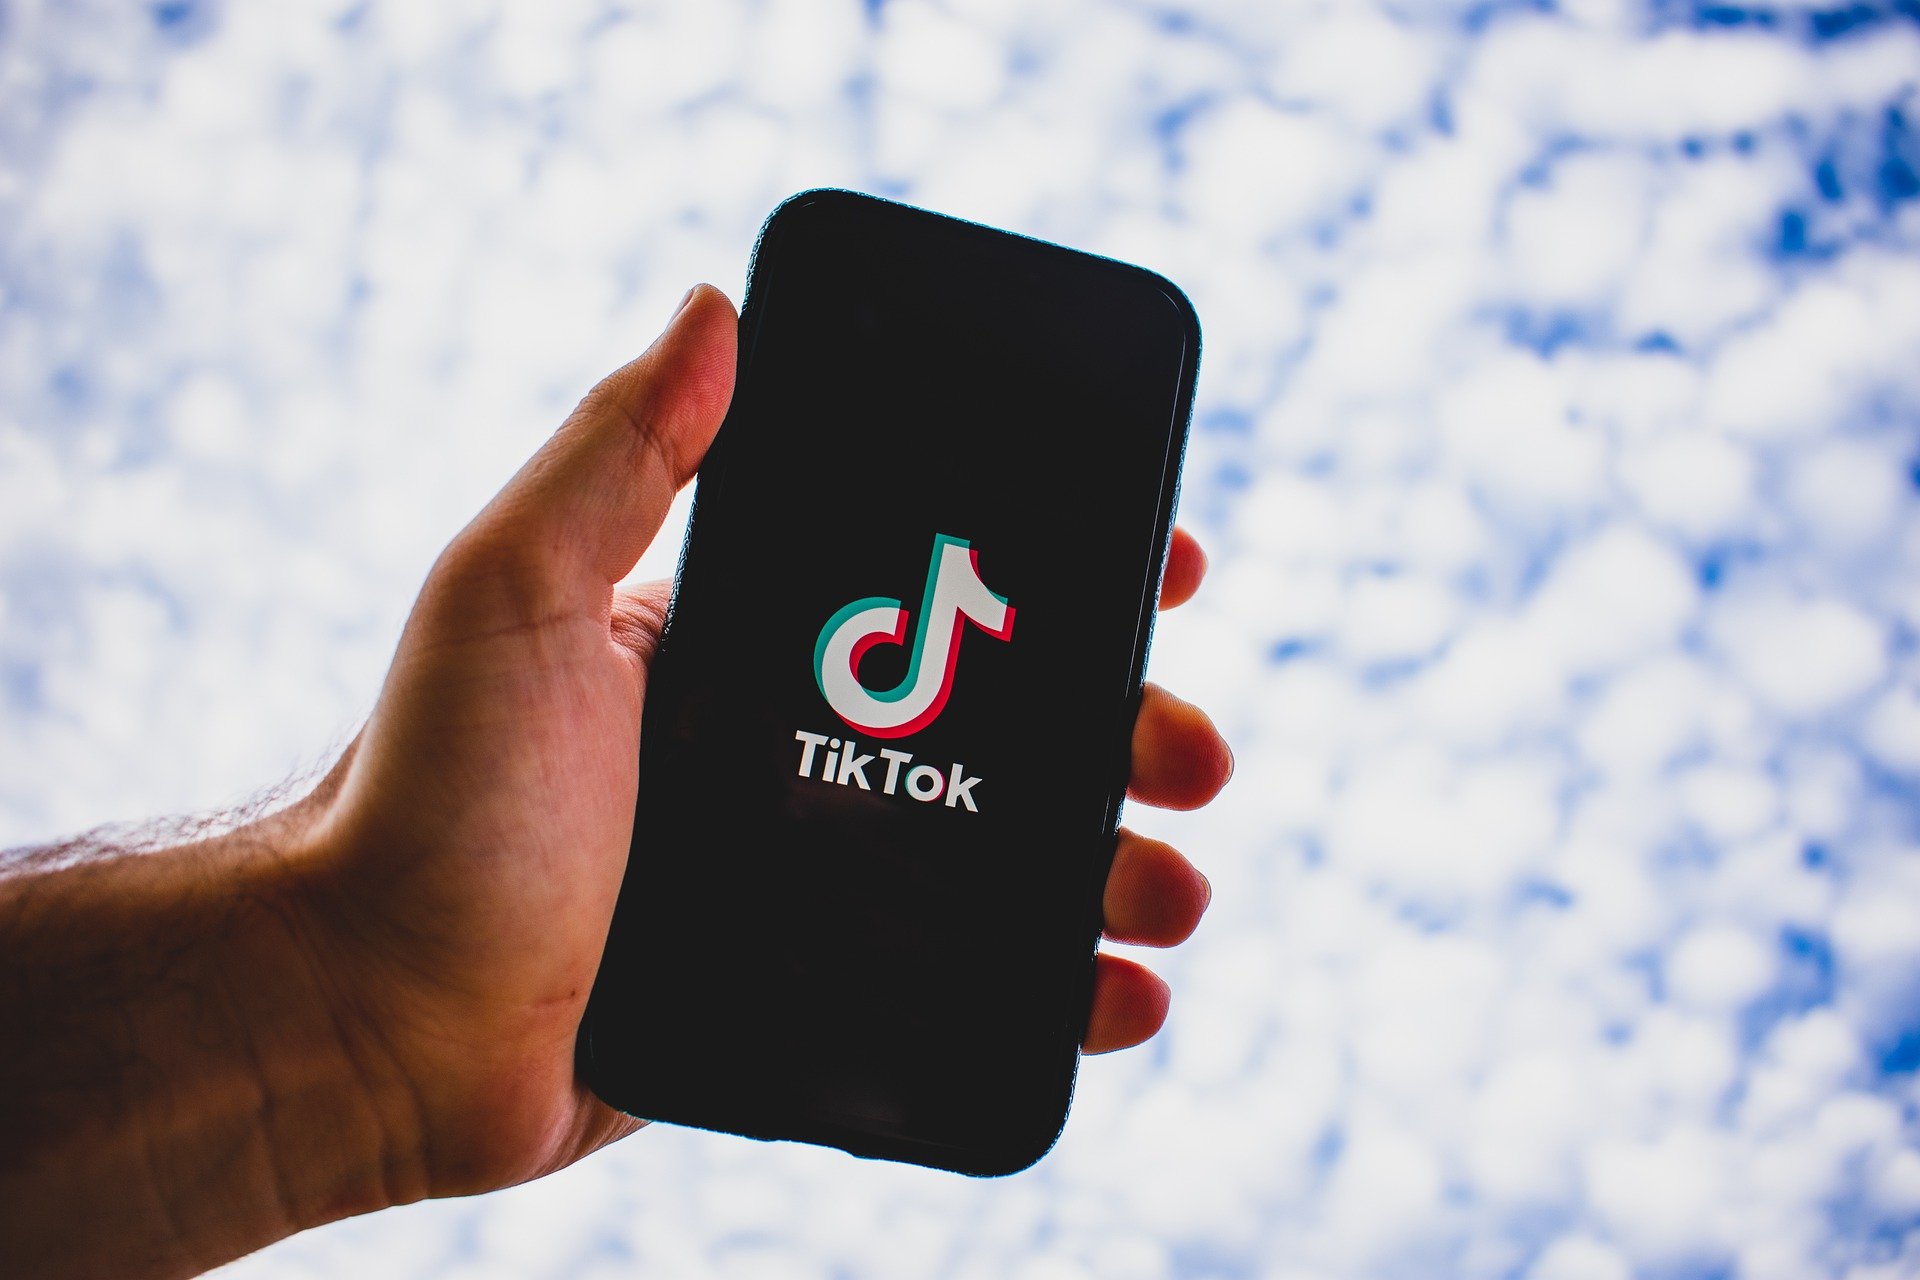 Social Media Marketing on TikTok - UENI Blog